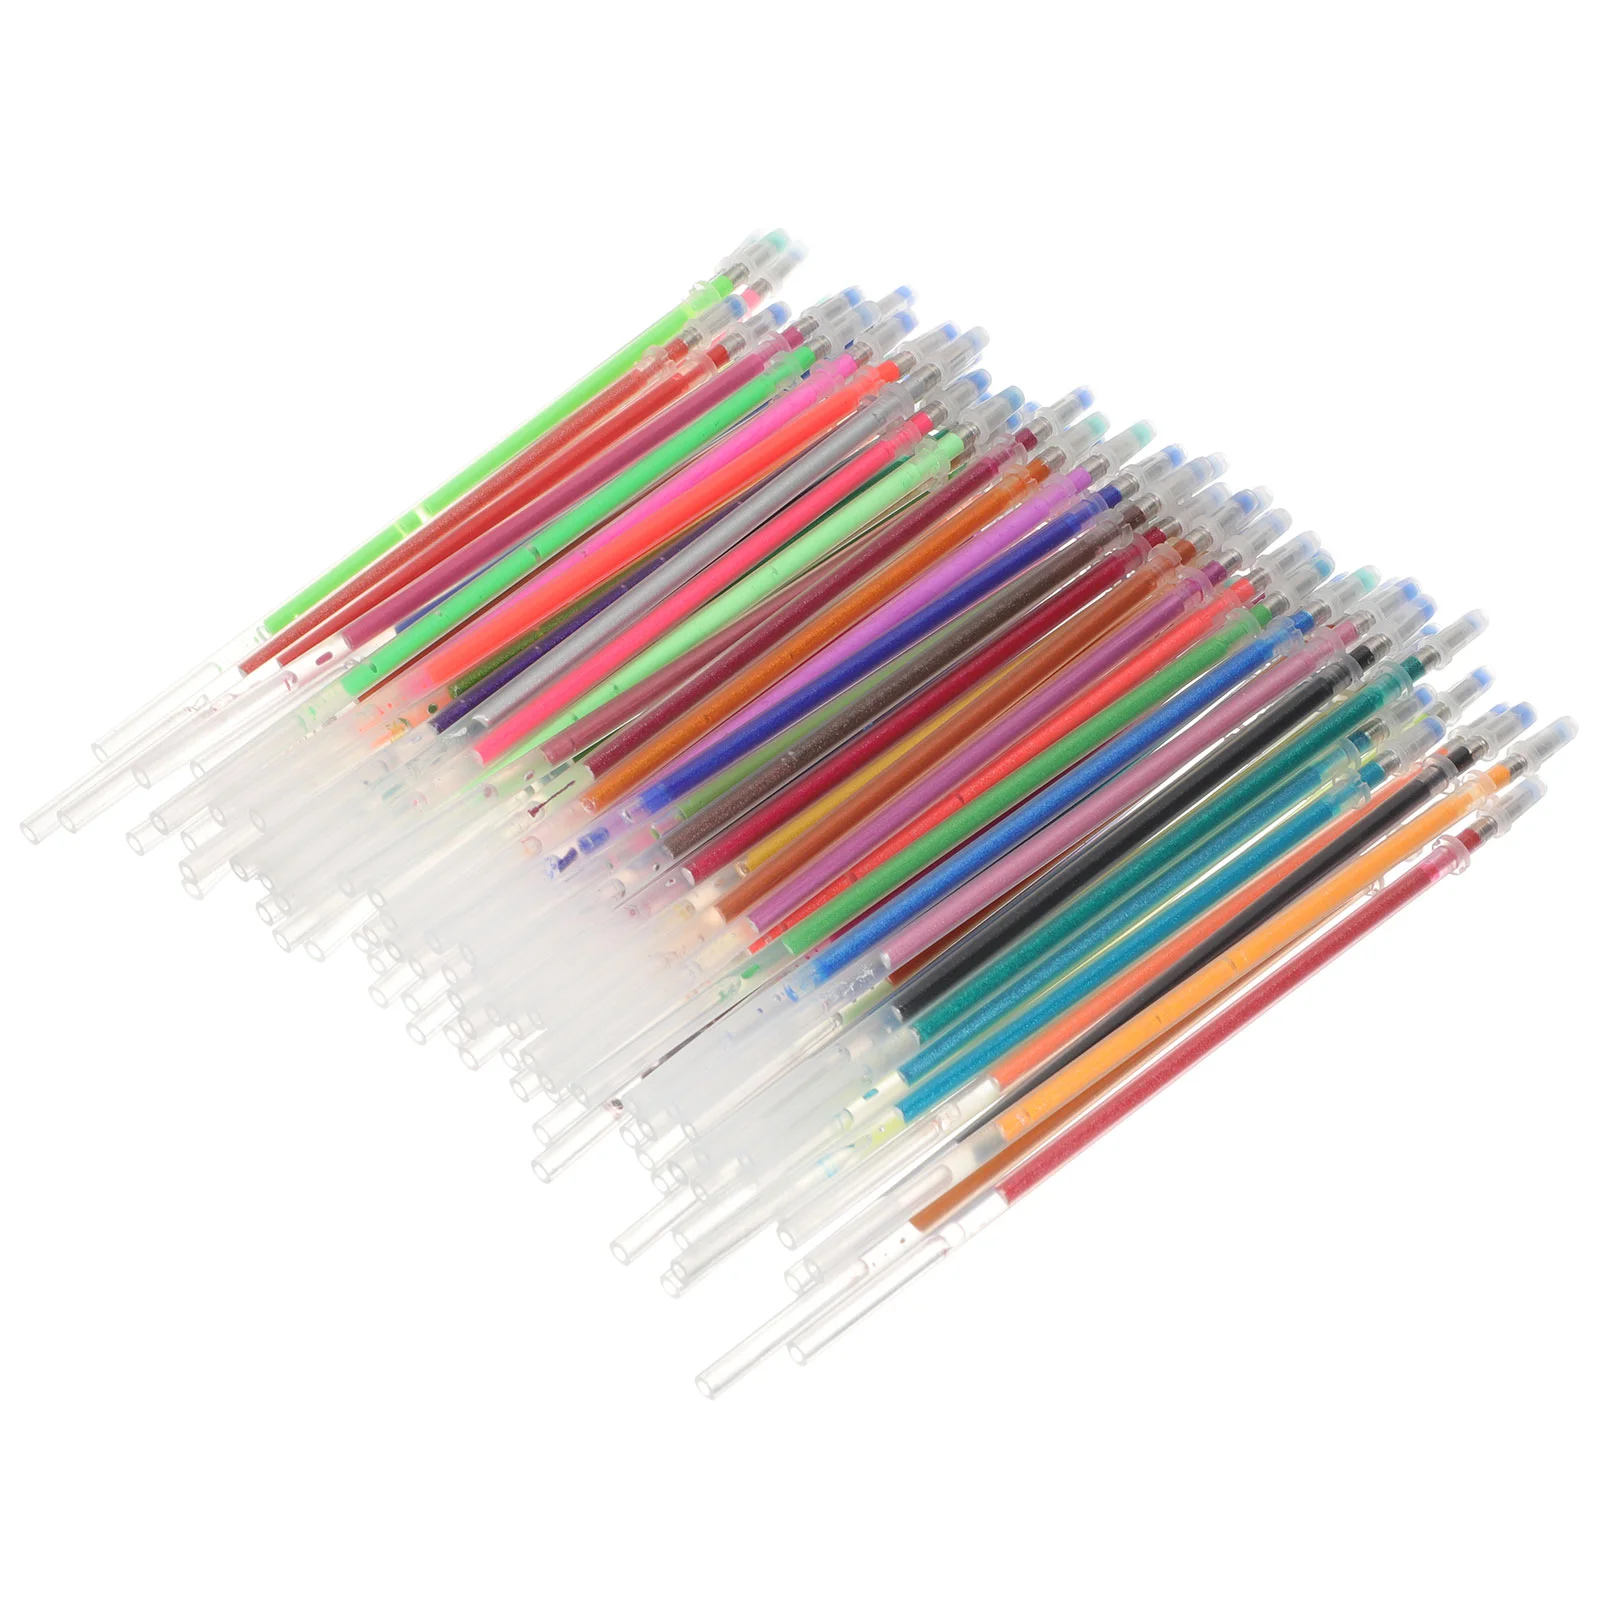 

84 Pcs Gel Refill Set Colored Pen Refills Students Supplies Fluorescence Creative Pens Plastic Colorful Neutral